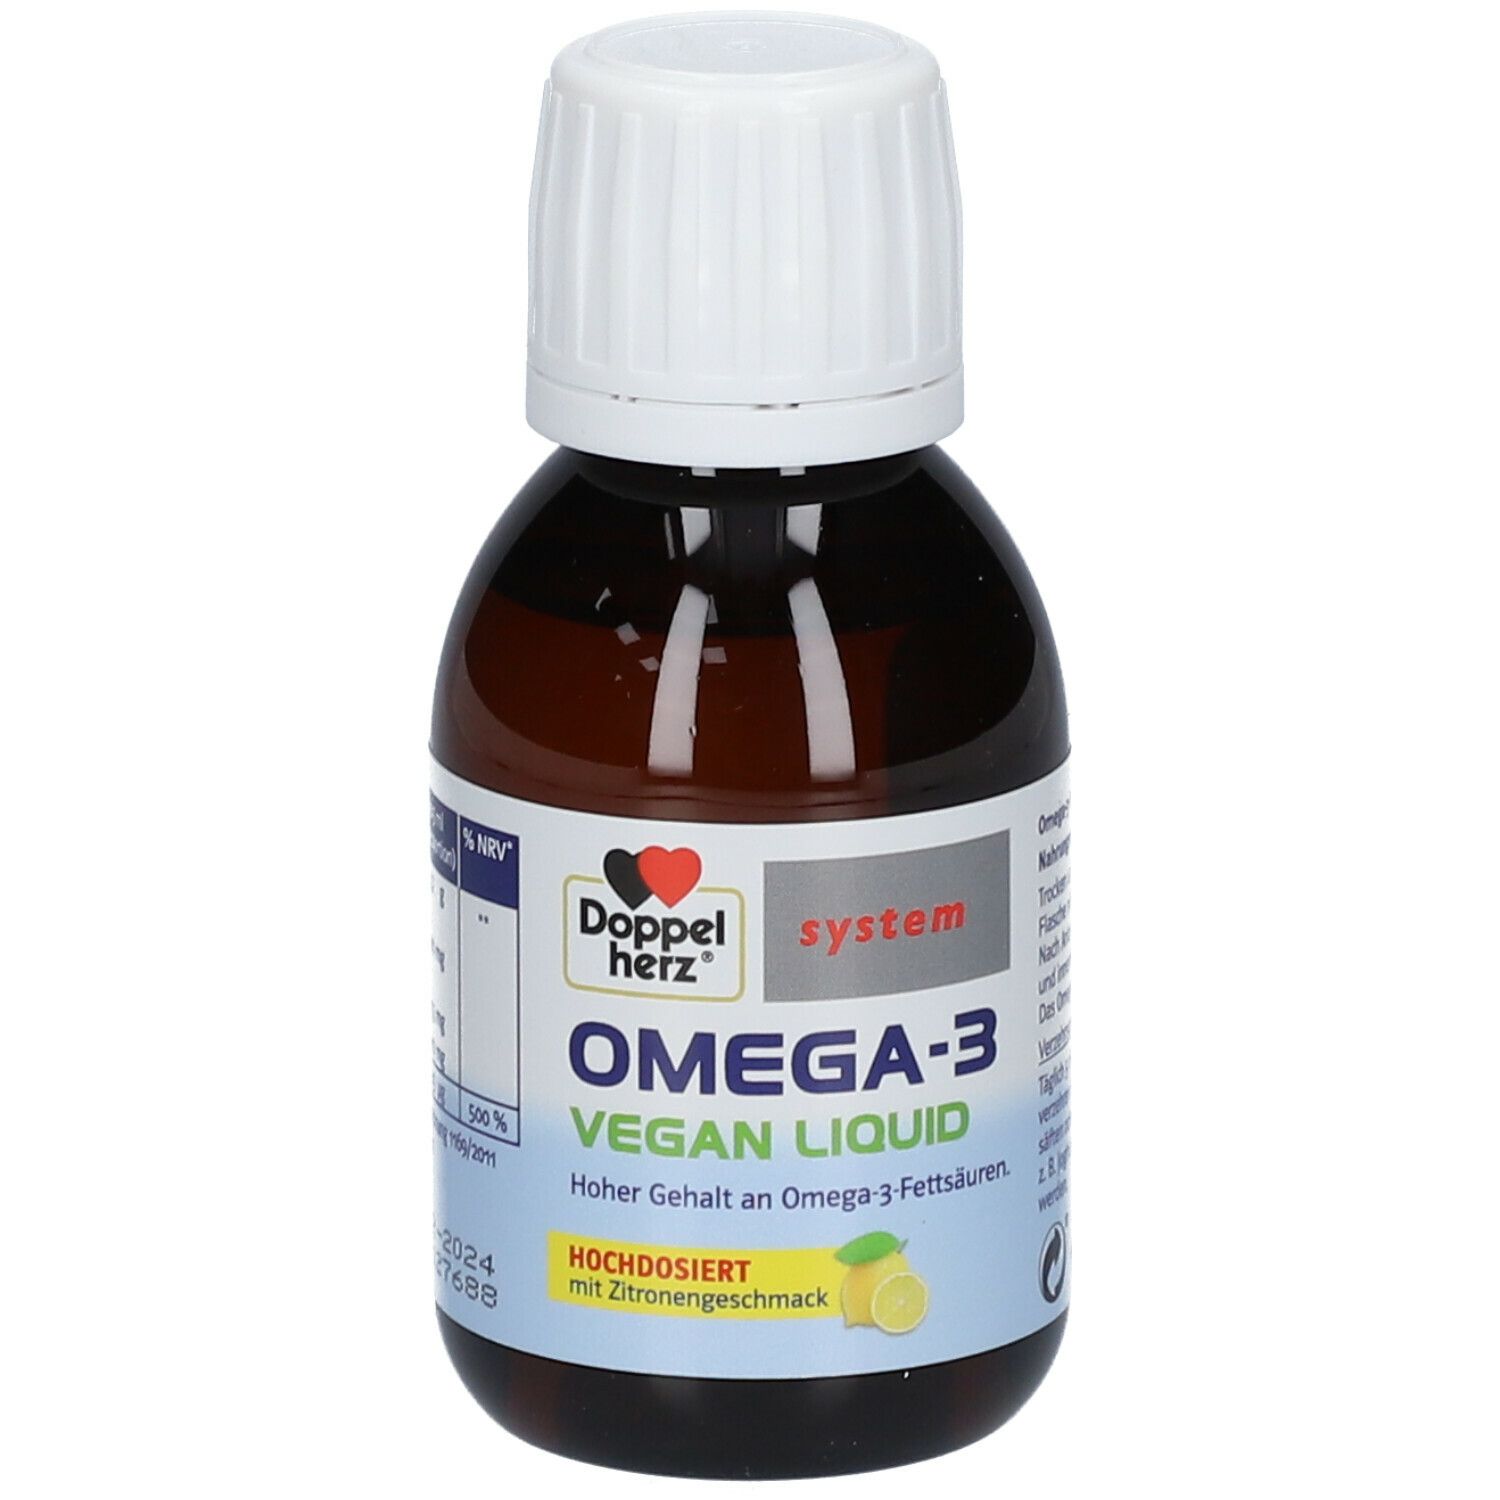 Image of Doppelherz® system Omega-3 Vegan Liquid